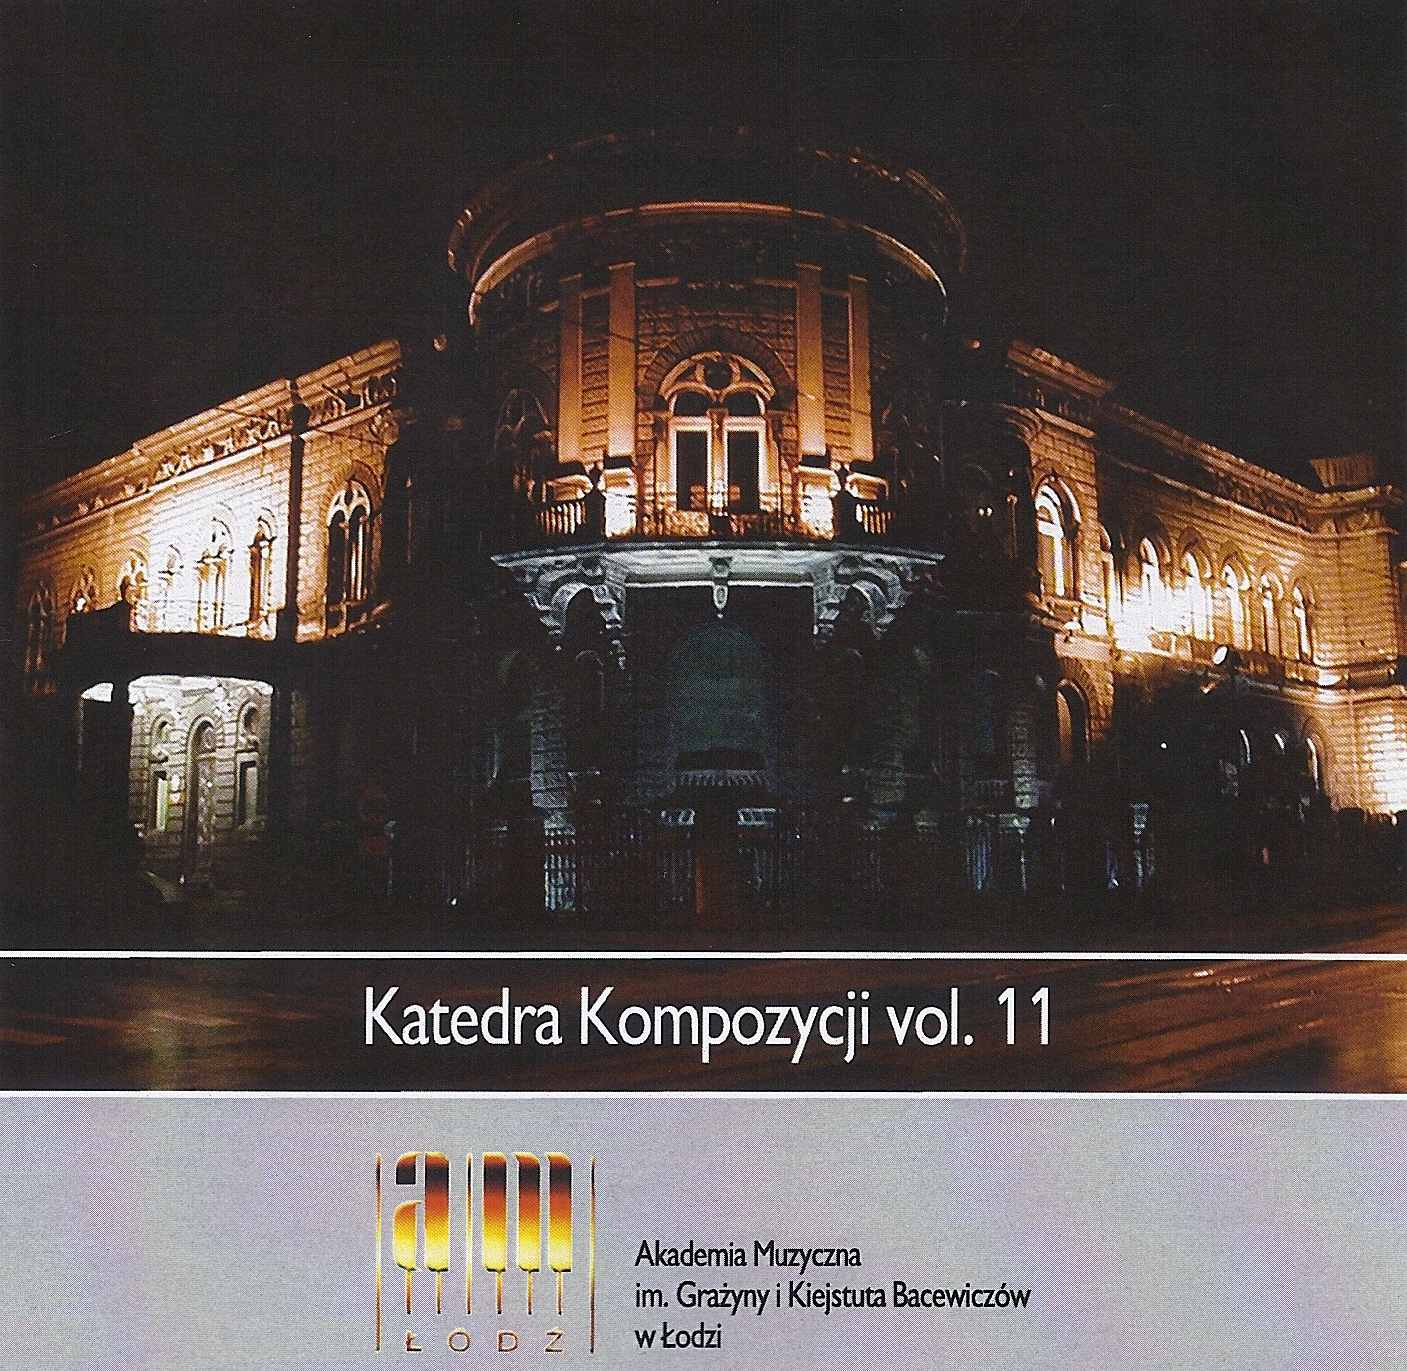 Katedra Kompozycji vol. 11